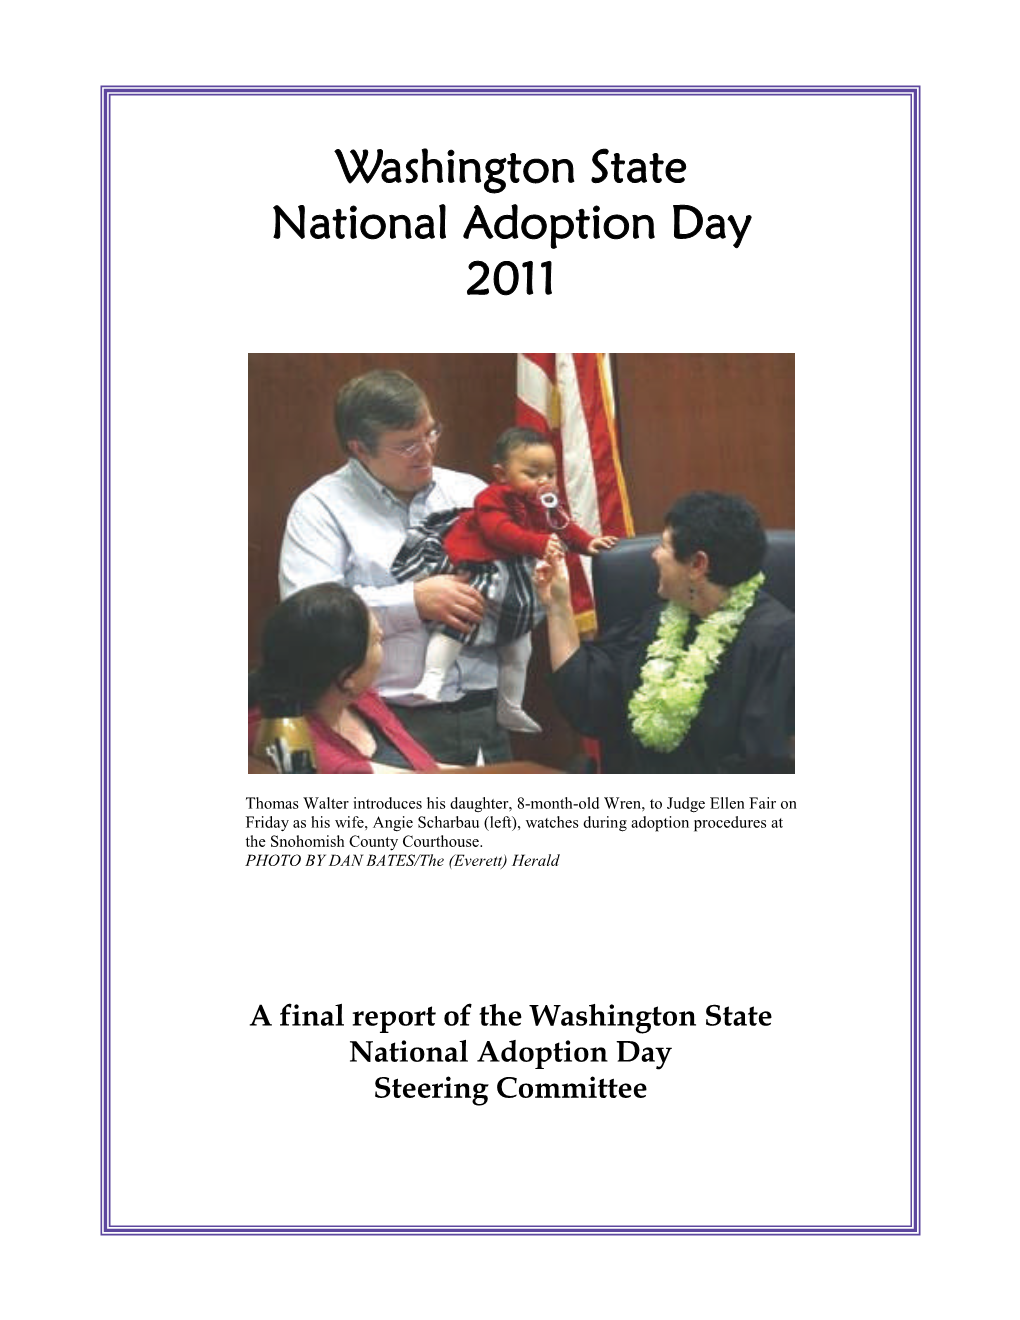 Washington State National Adoption Day 2011